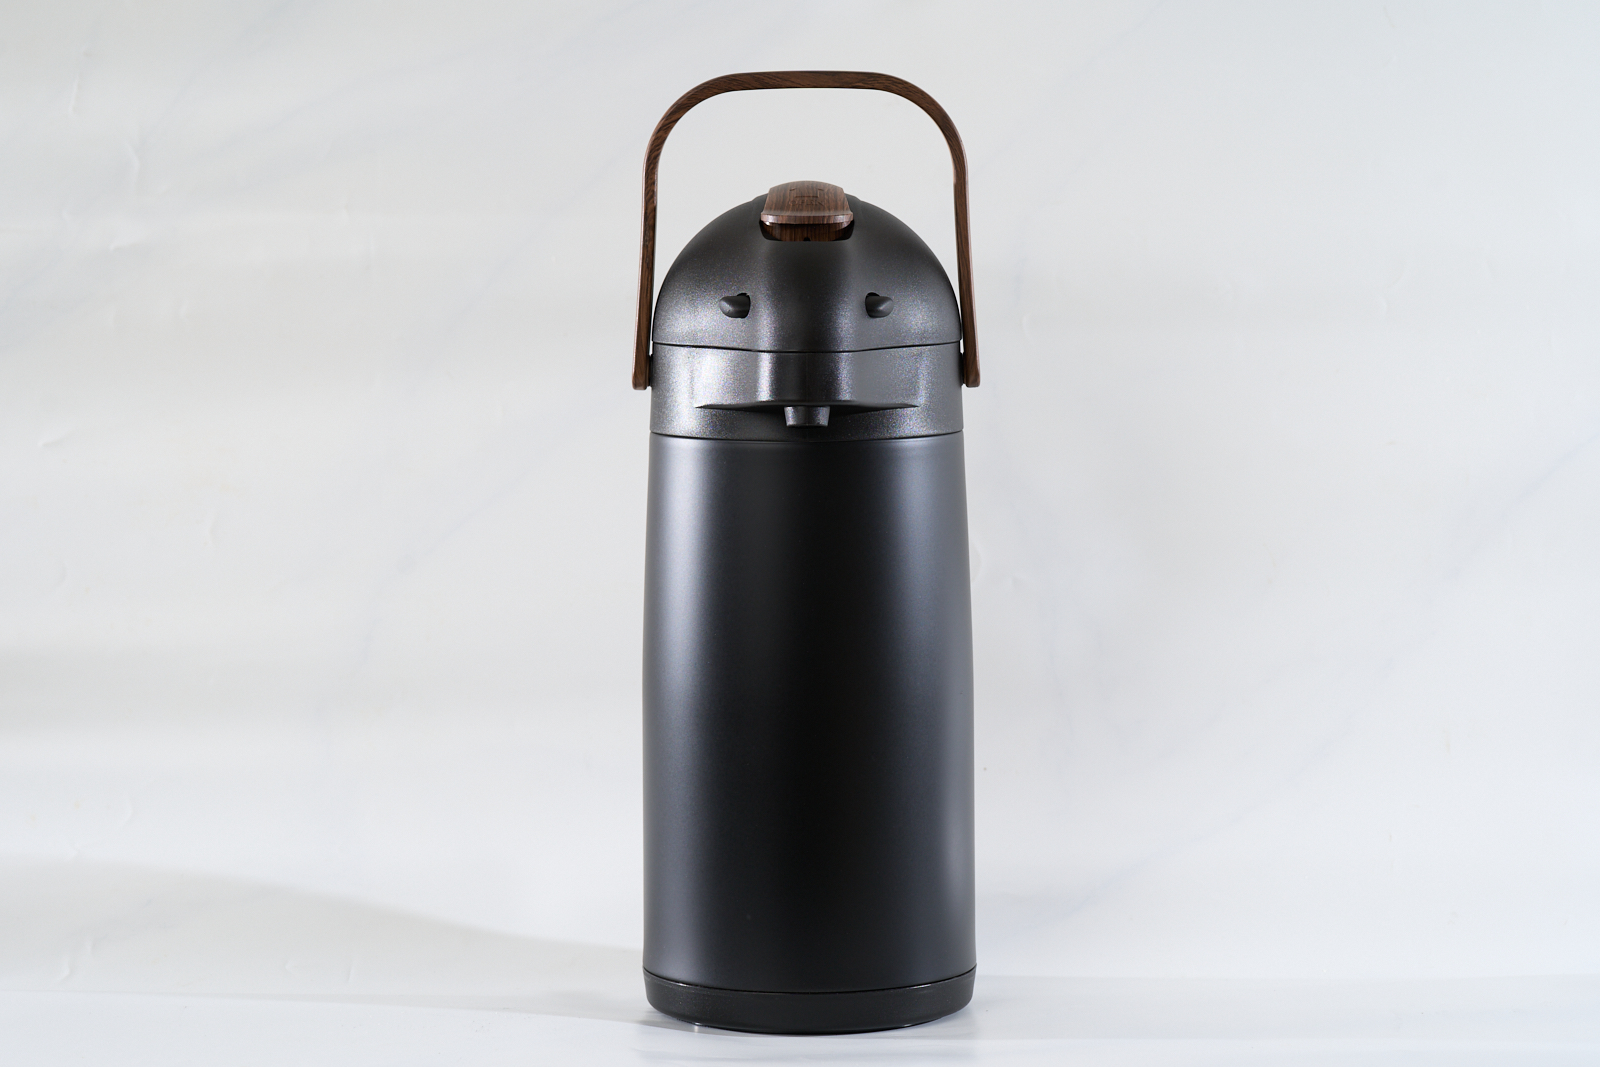 DSC06077 - Amazon hot sale wooden airpot coffee dispenser with pump 3 liter